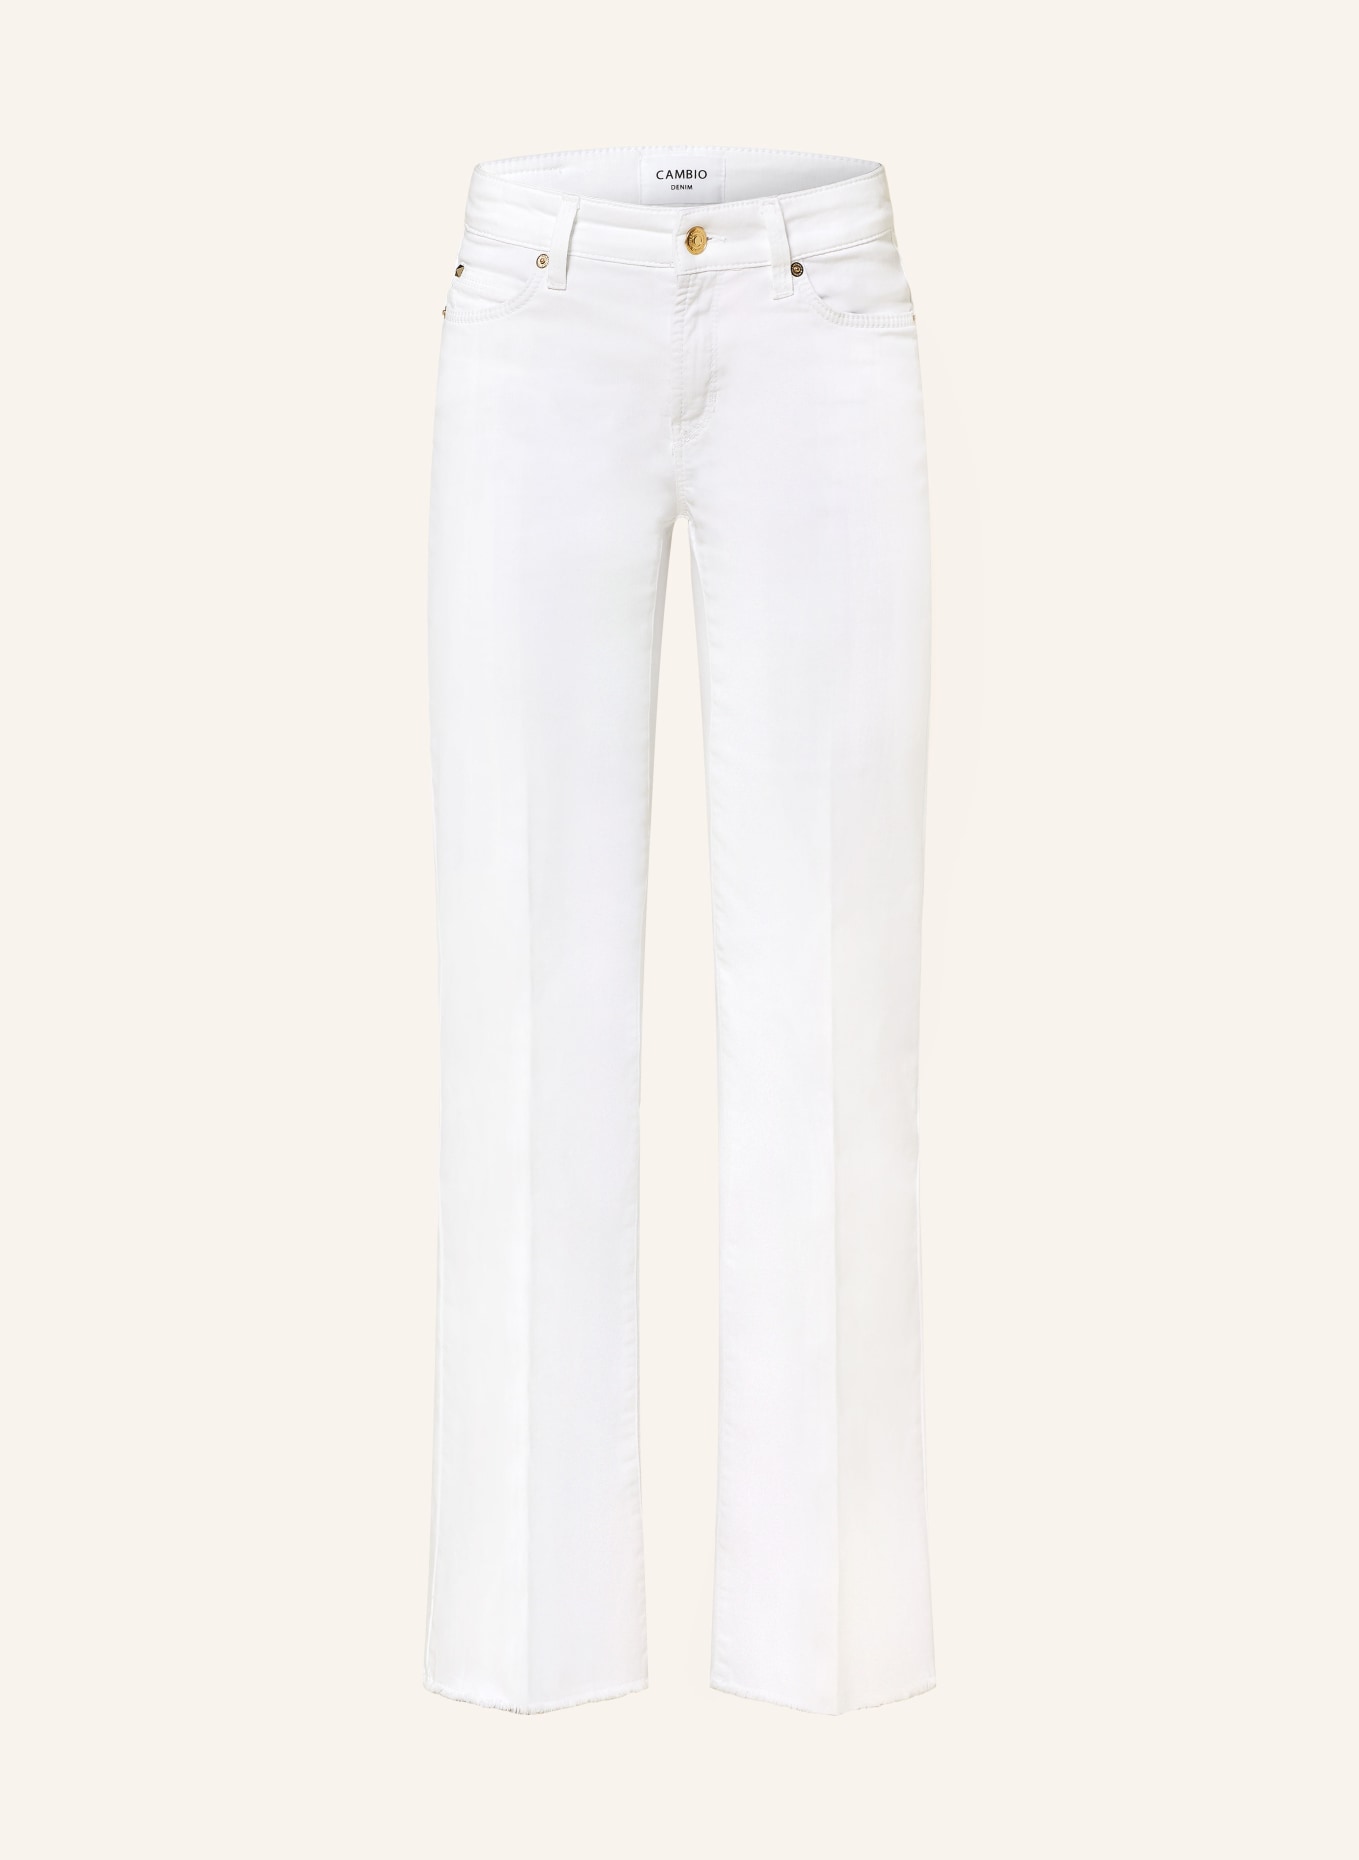 CAMBIO Flared Jeans PARIS, Farbe: WEISS (Bild 1)